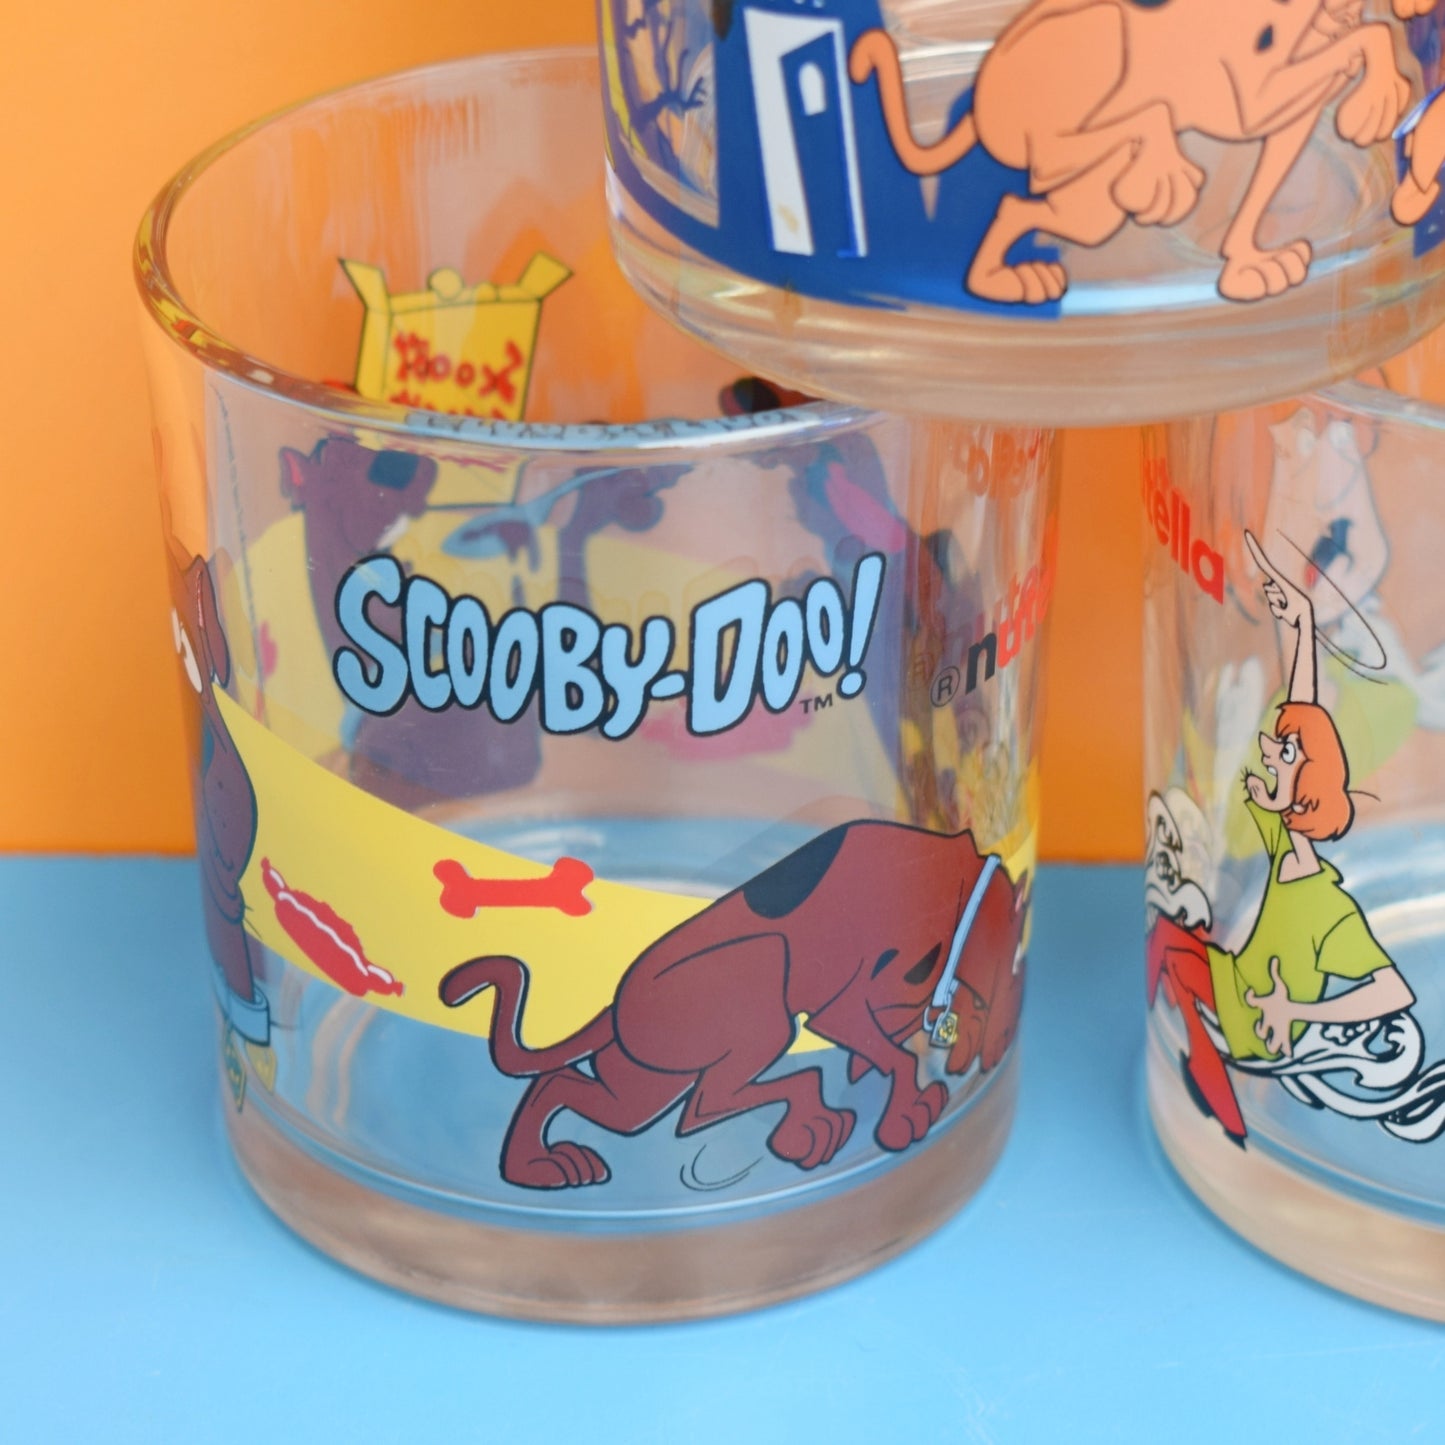 Vintage 1990s Nutella Glasses x6 - Scooby Doo